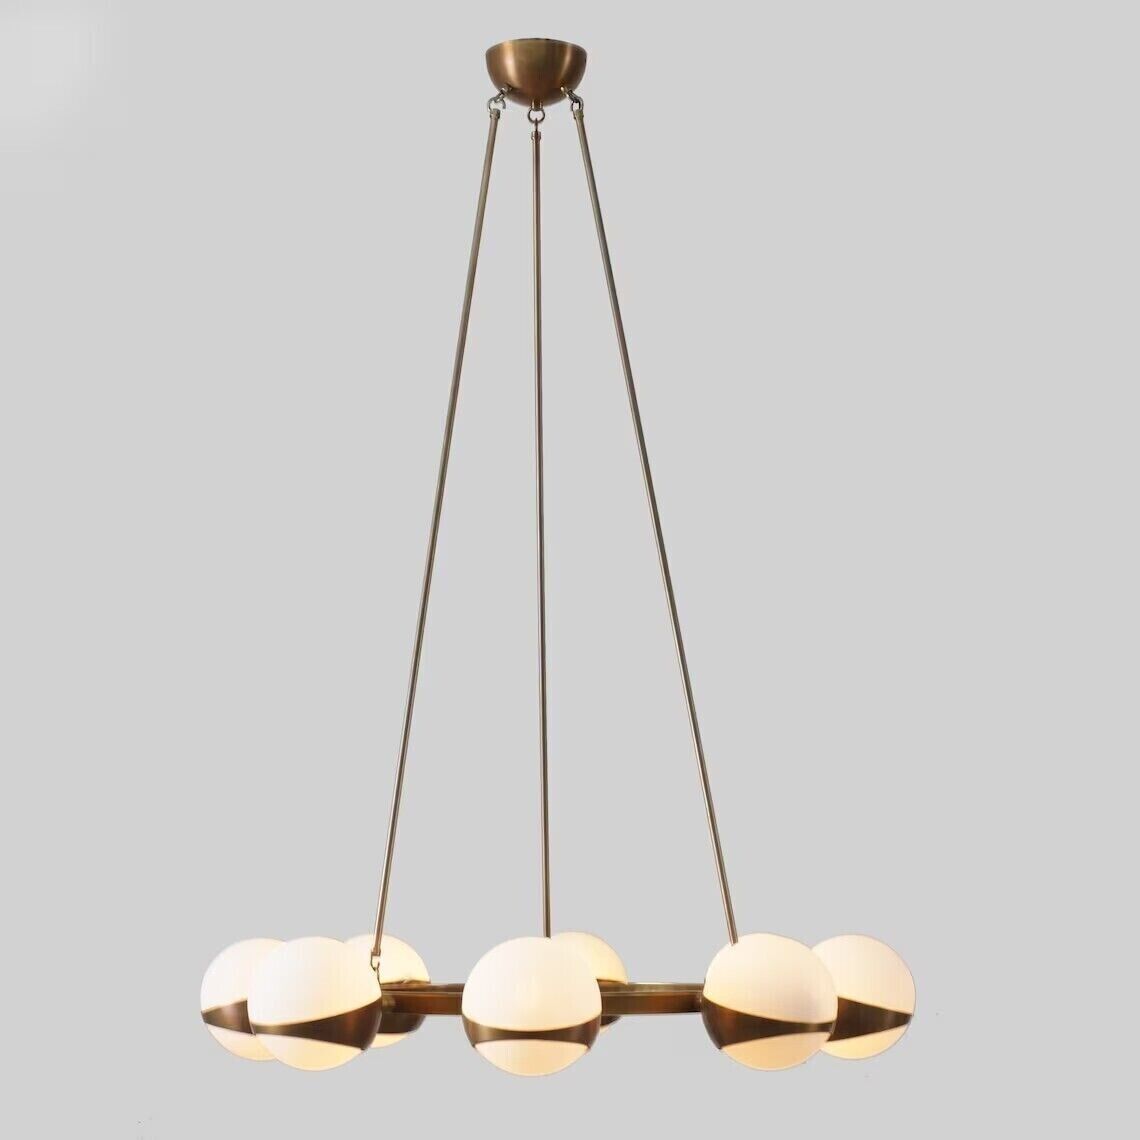 Stilnovo 8 Globe Raw Brass Chandelier Light Fixture Modern Sputnik Ceiling Light